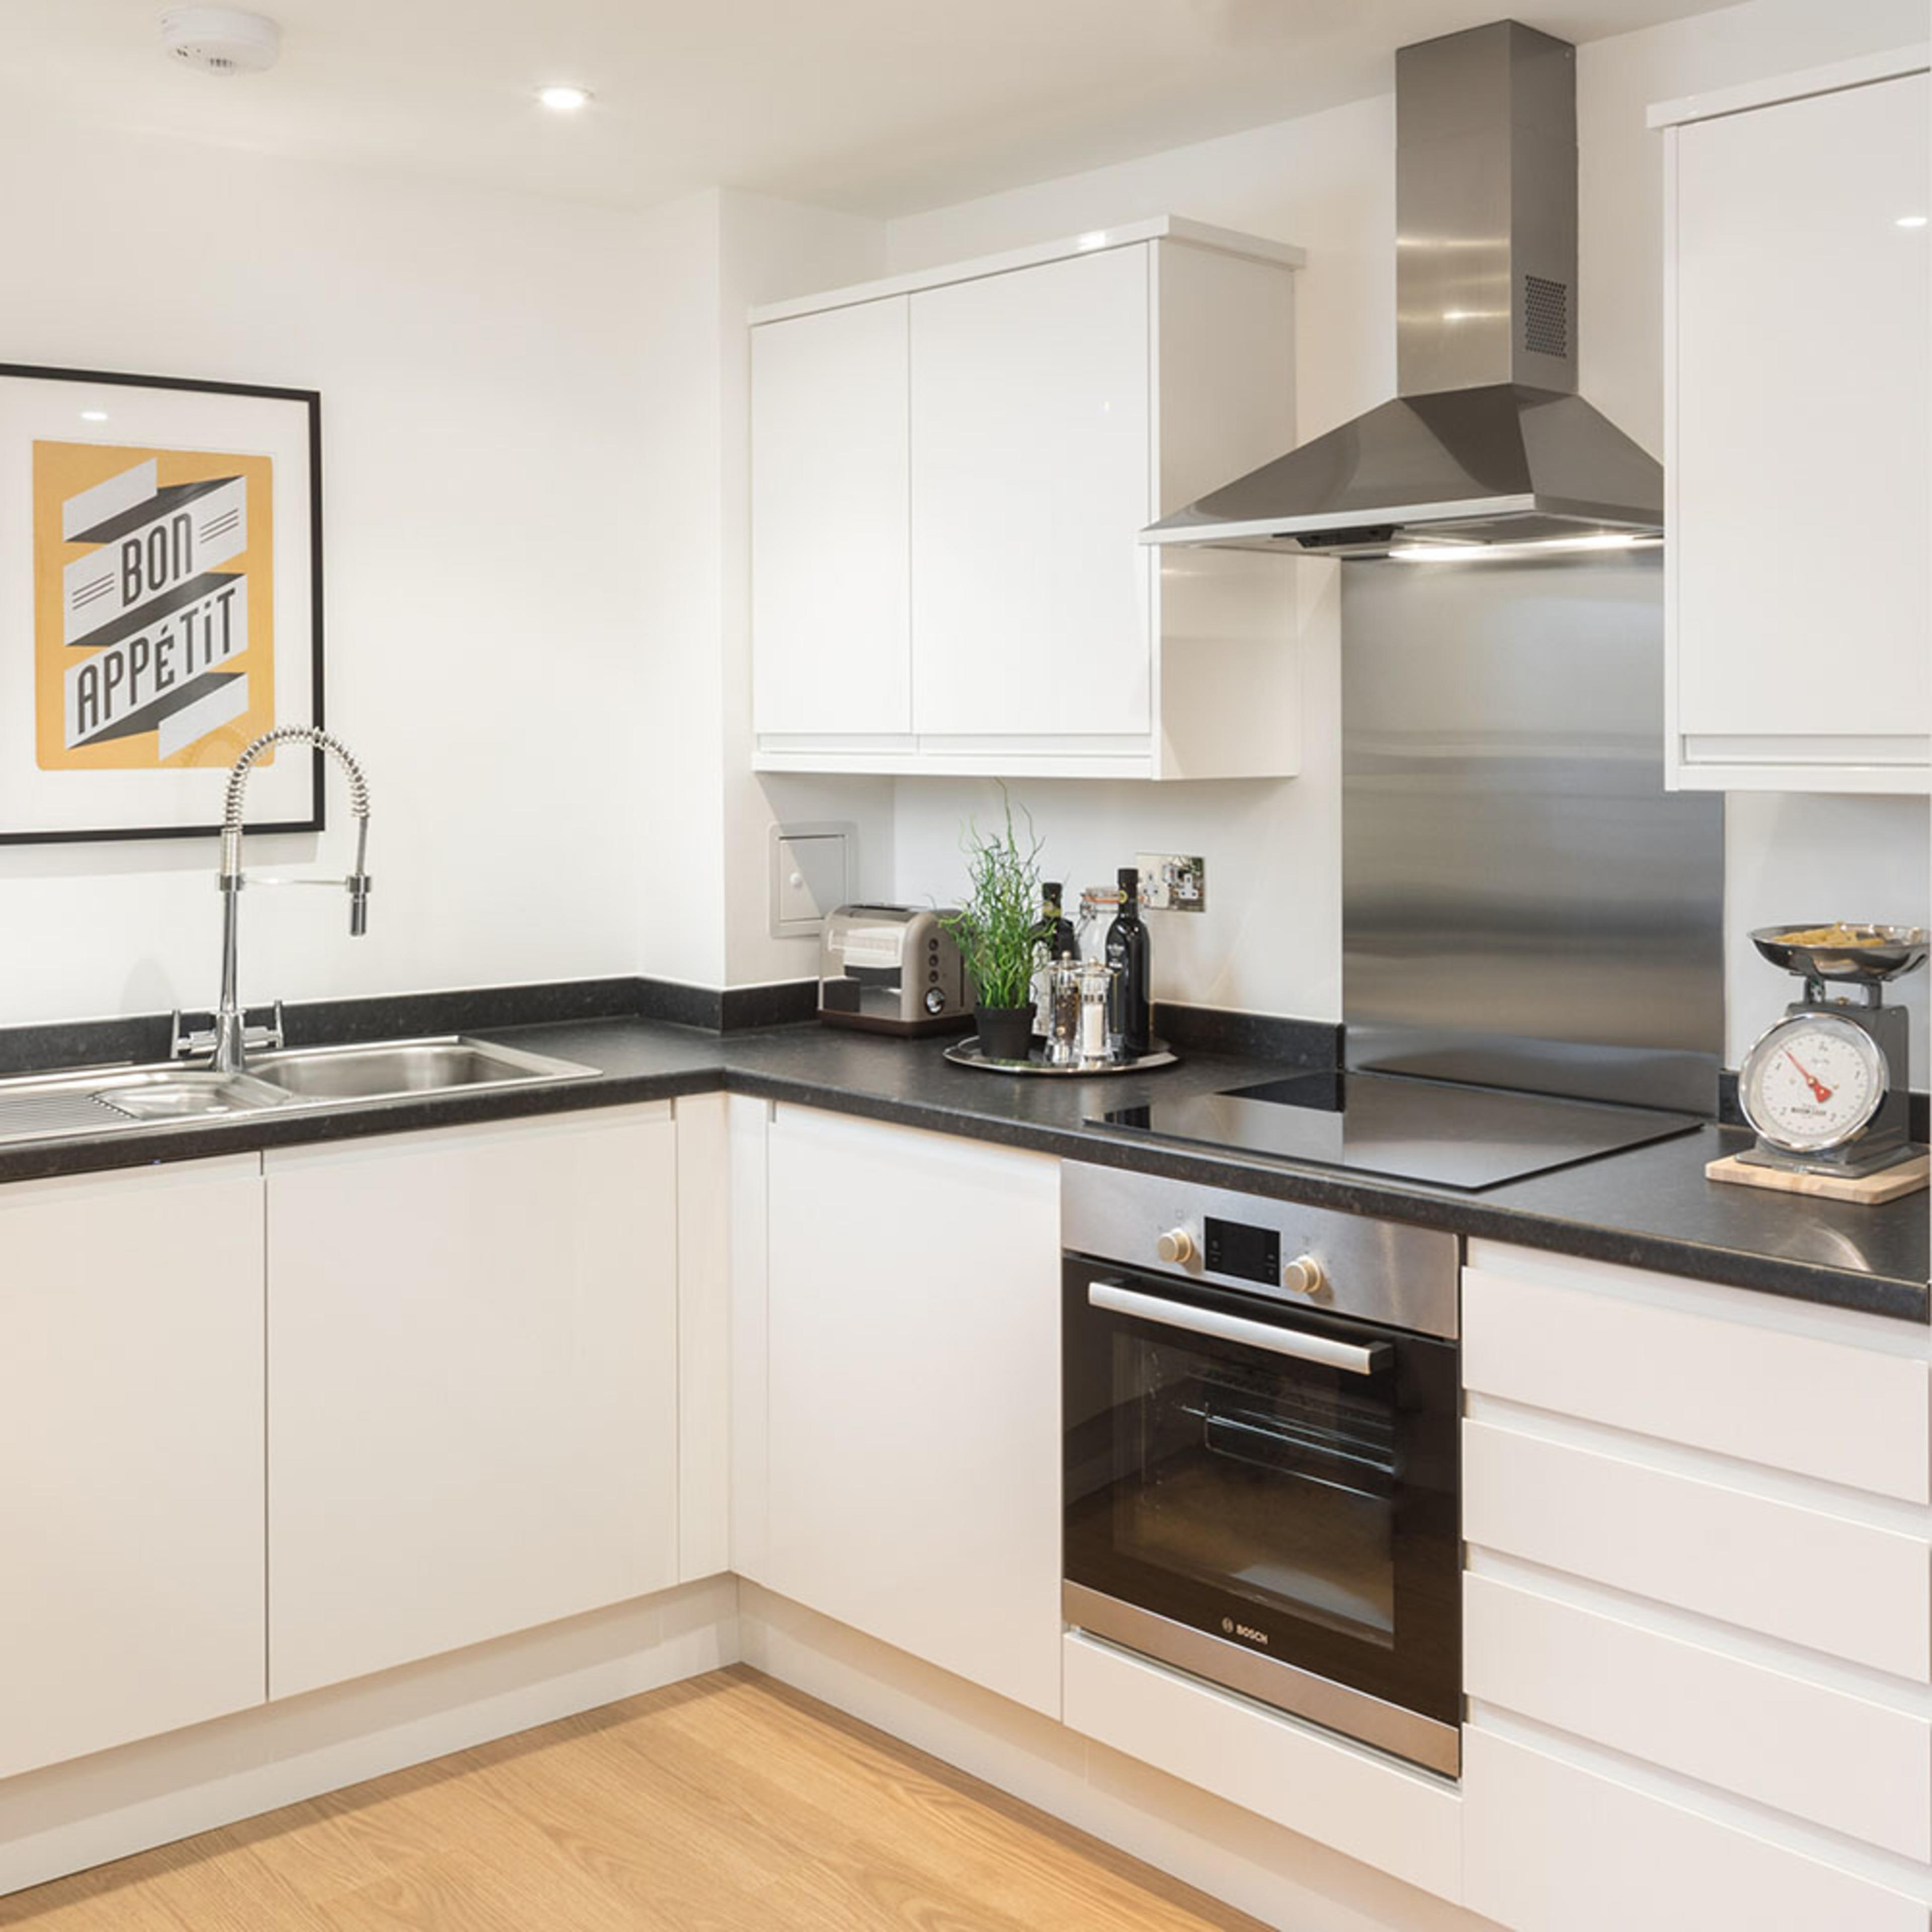 persona-homes-specification-kitchen-white-units-black-worktops-laminate-floor-bosch-oven-steel hood-